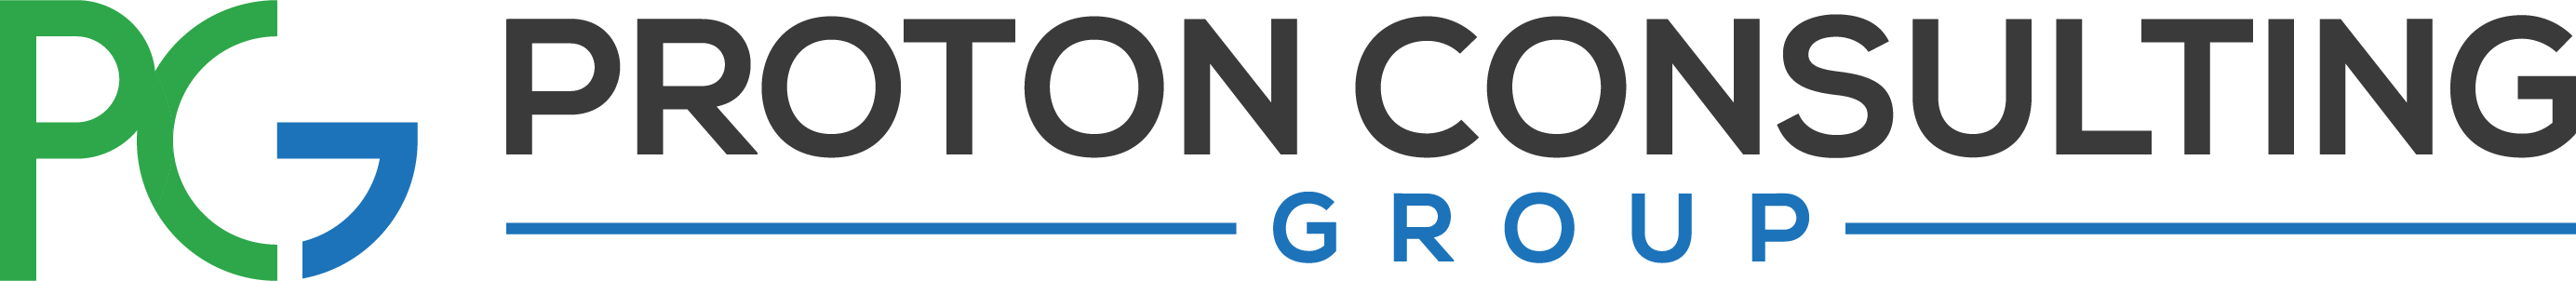 Proton Consulting Group Logo